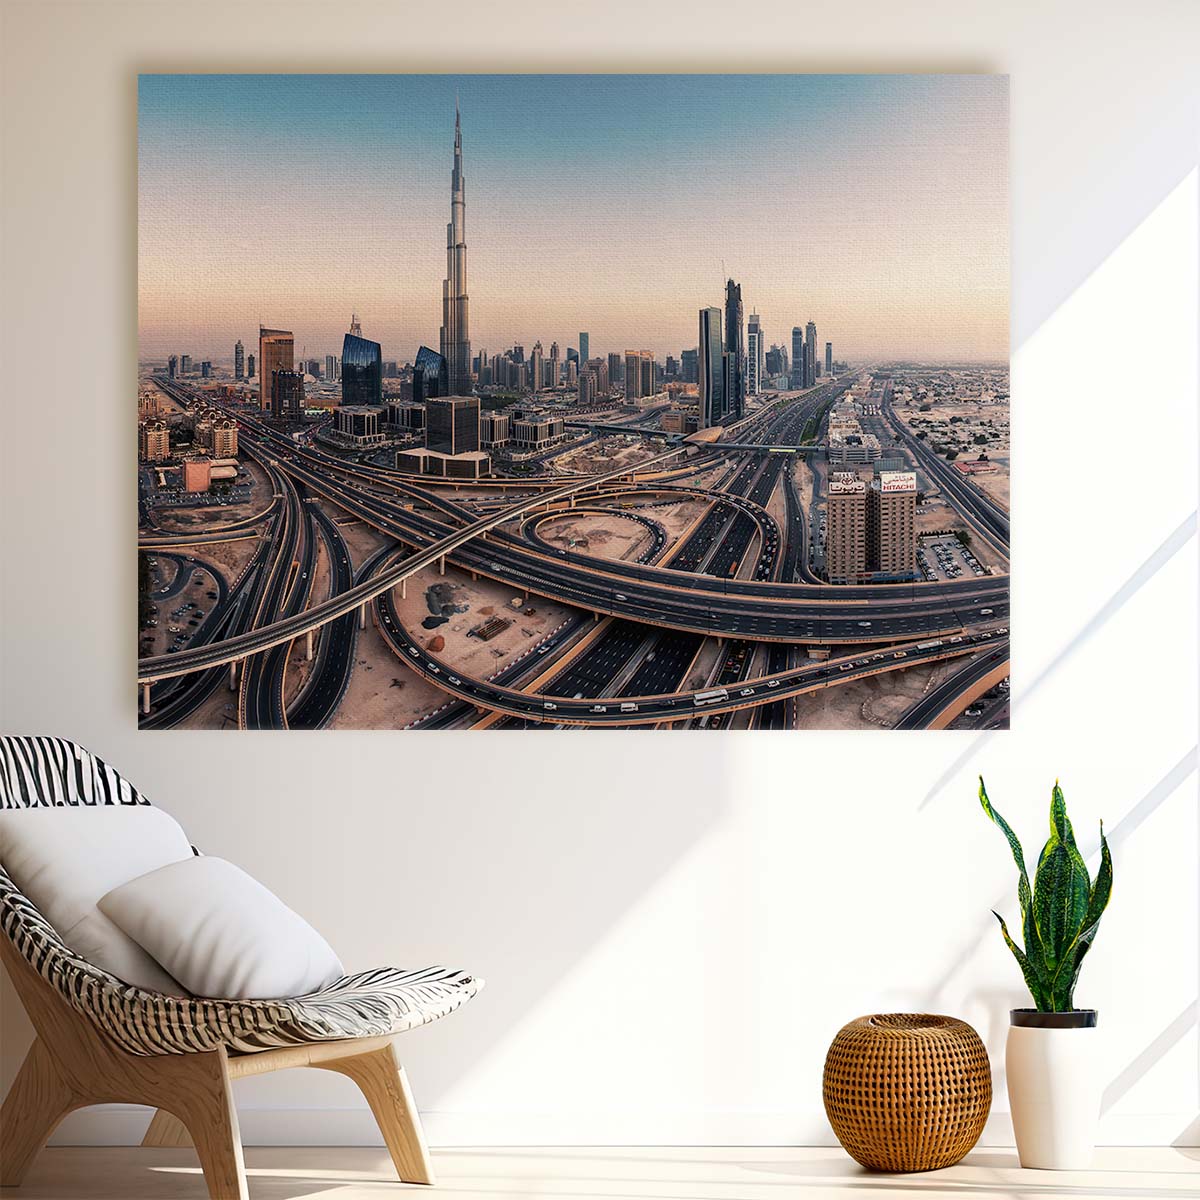 Dubai Urban Skyline & Iconic Landmarks Wall Art by Luxuriance Designs. Made in USA.